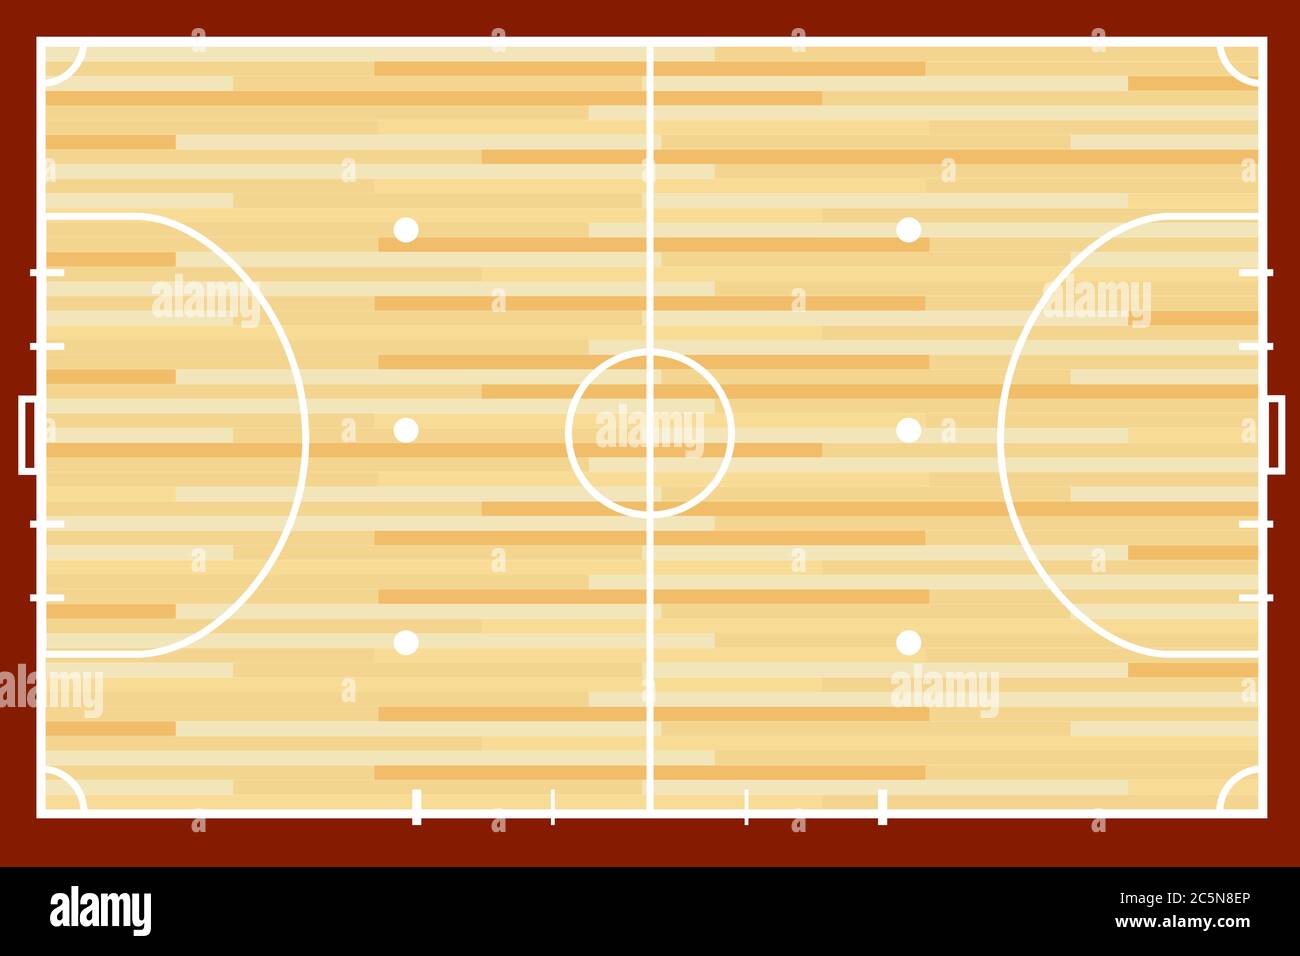 Futsal indoor outdoor court background vector illustration layout Stock Vector